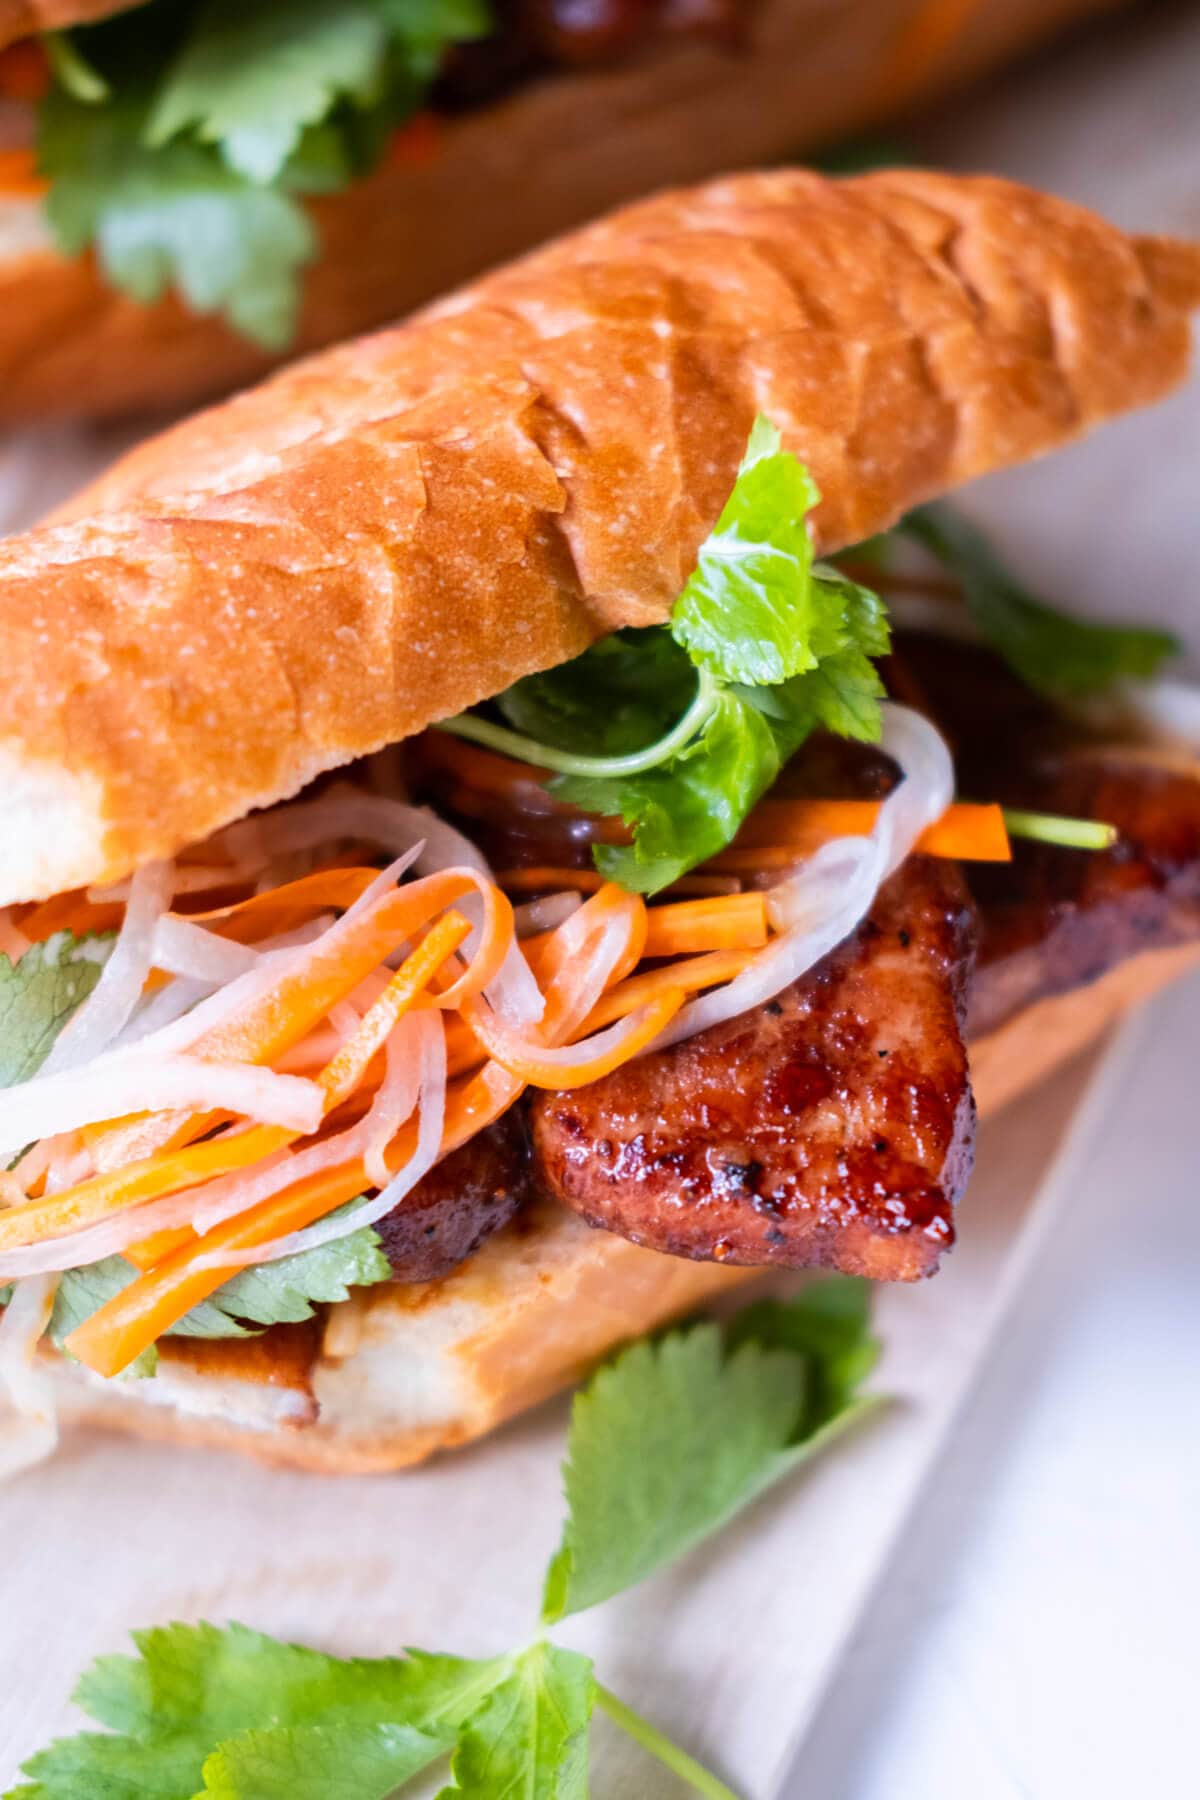 Vietnamese pork sandwich recipe with grilled pork marinated in lemongrass sauce. 